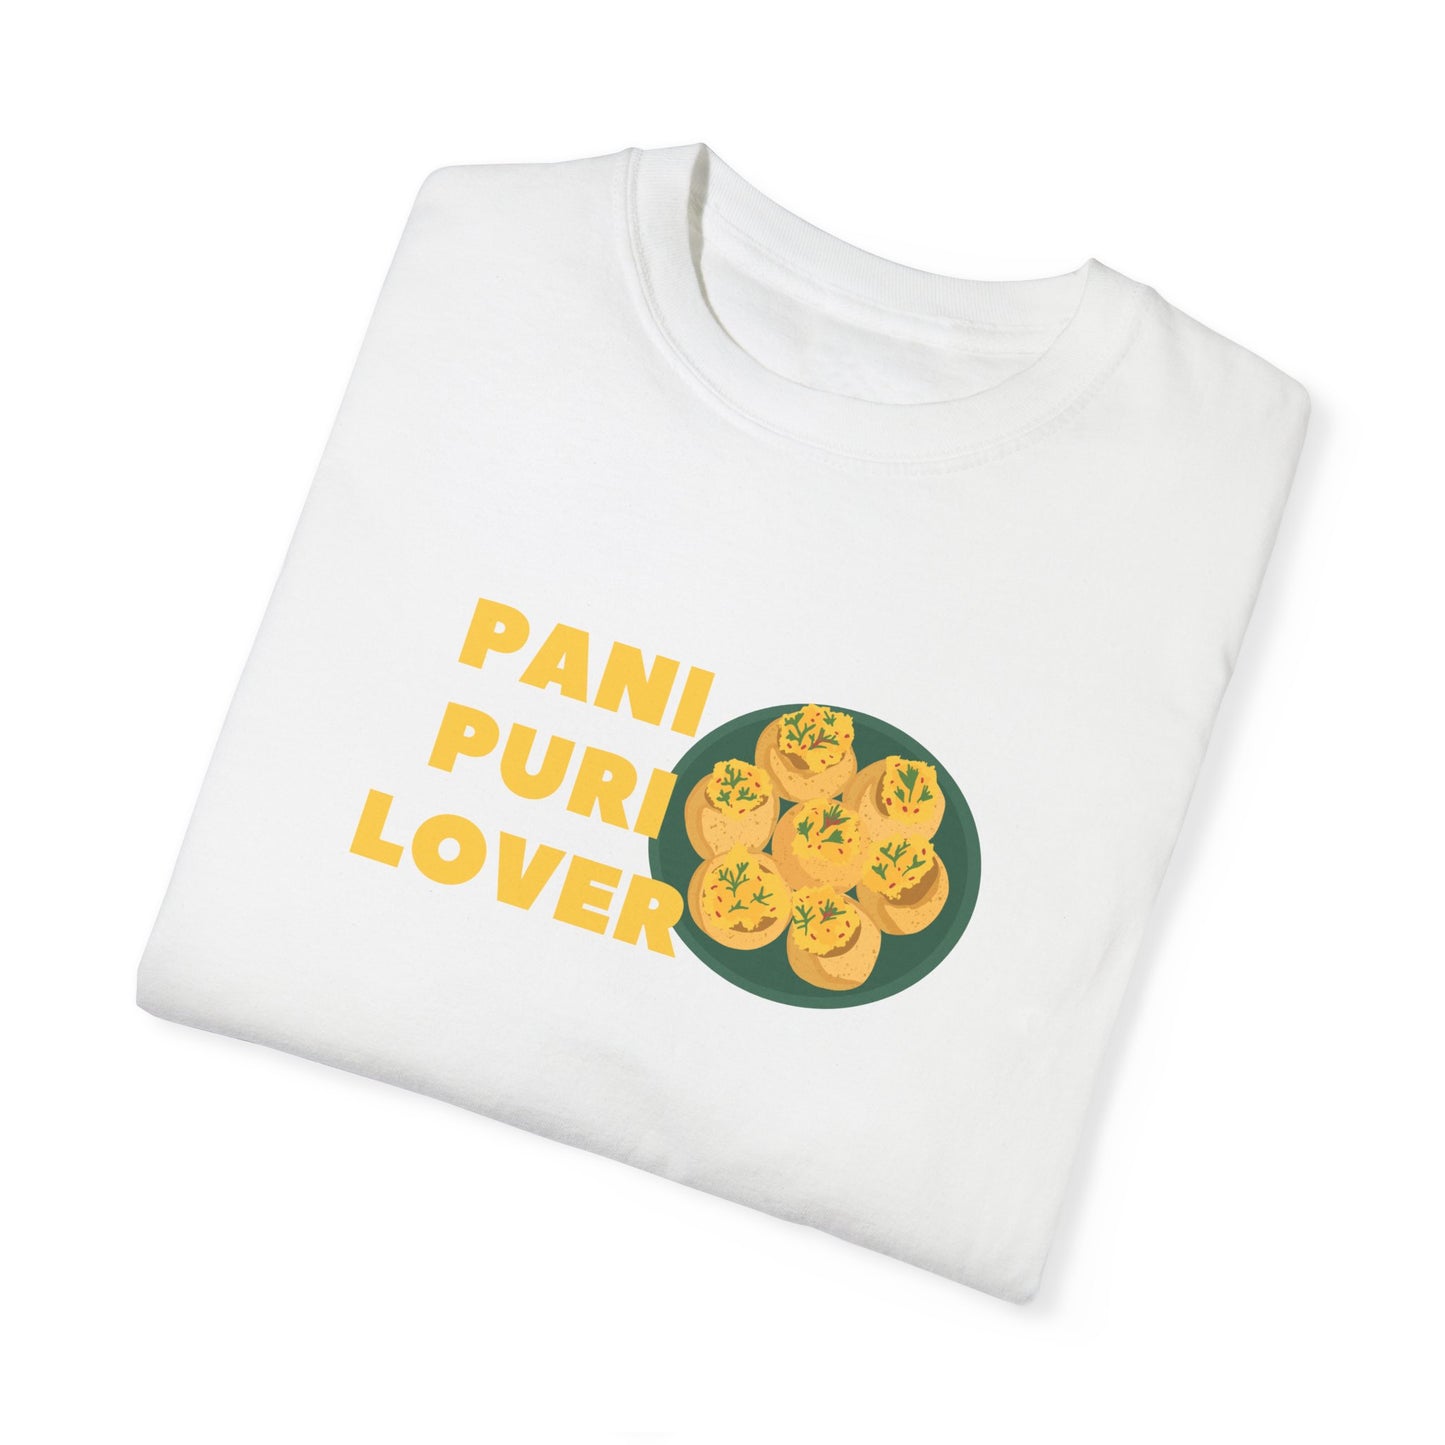 Pani Puri Lover T-Shirt